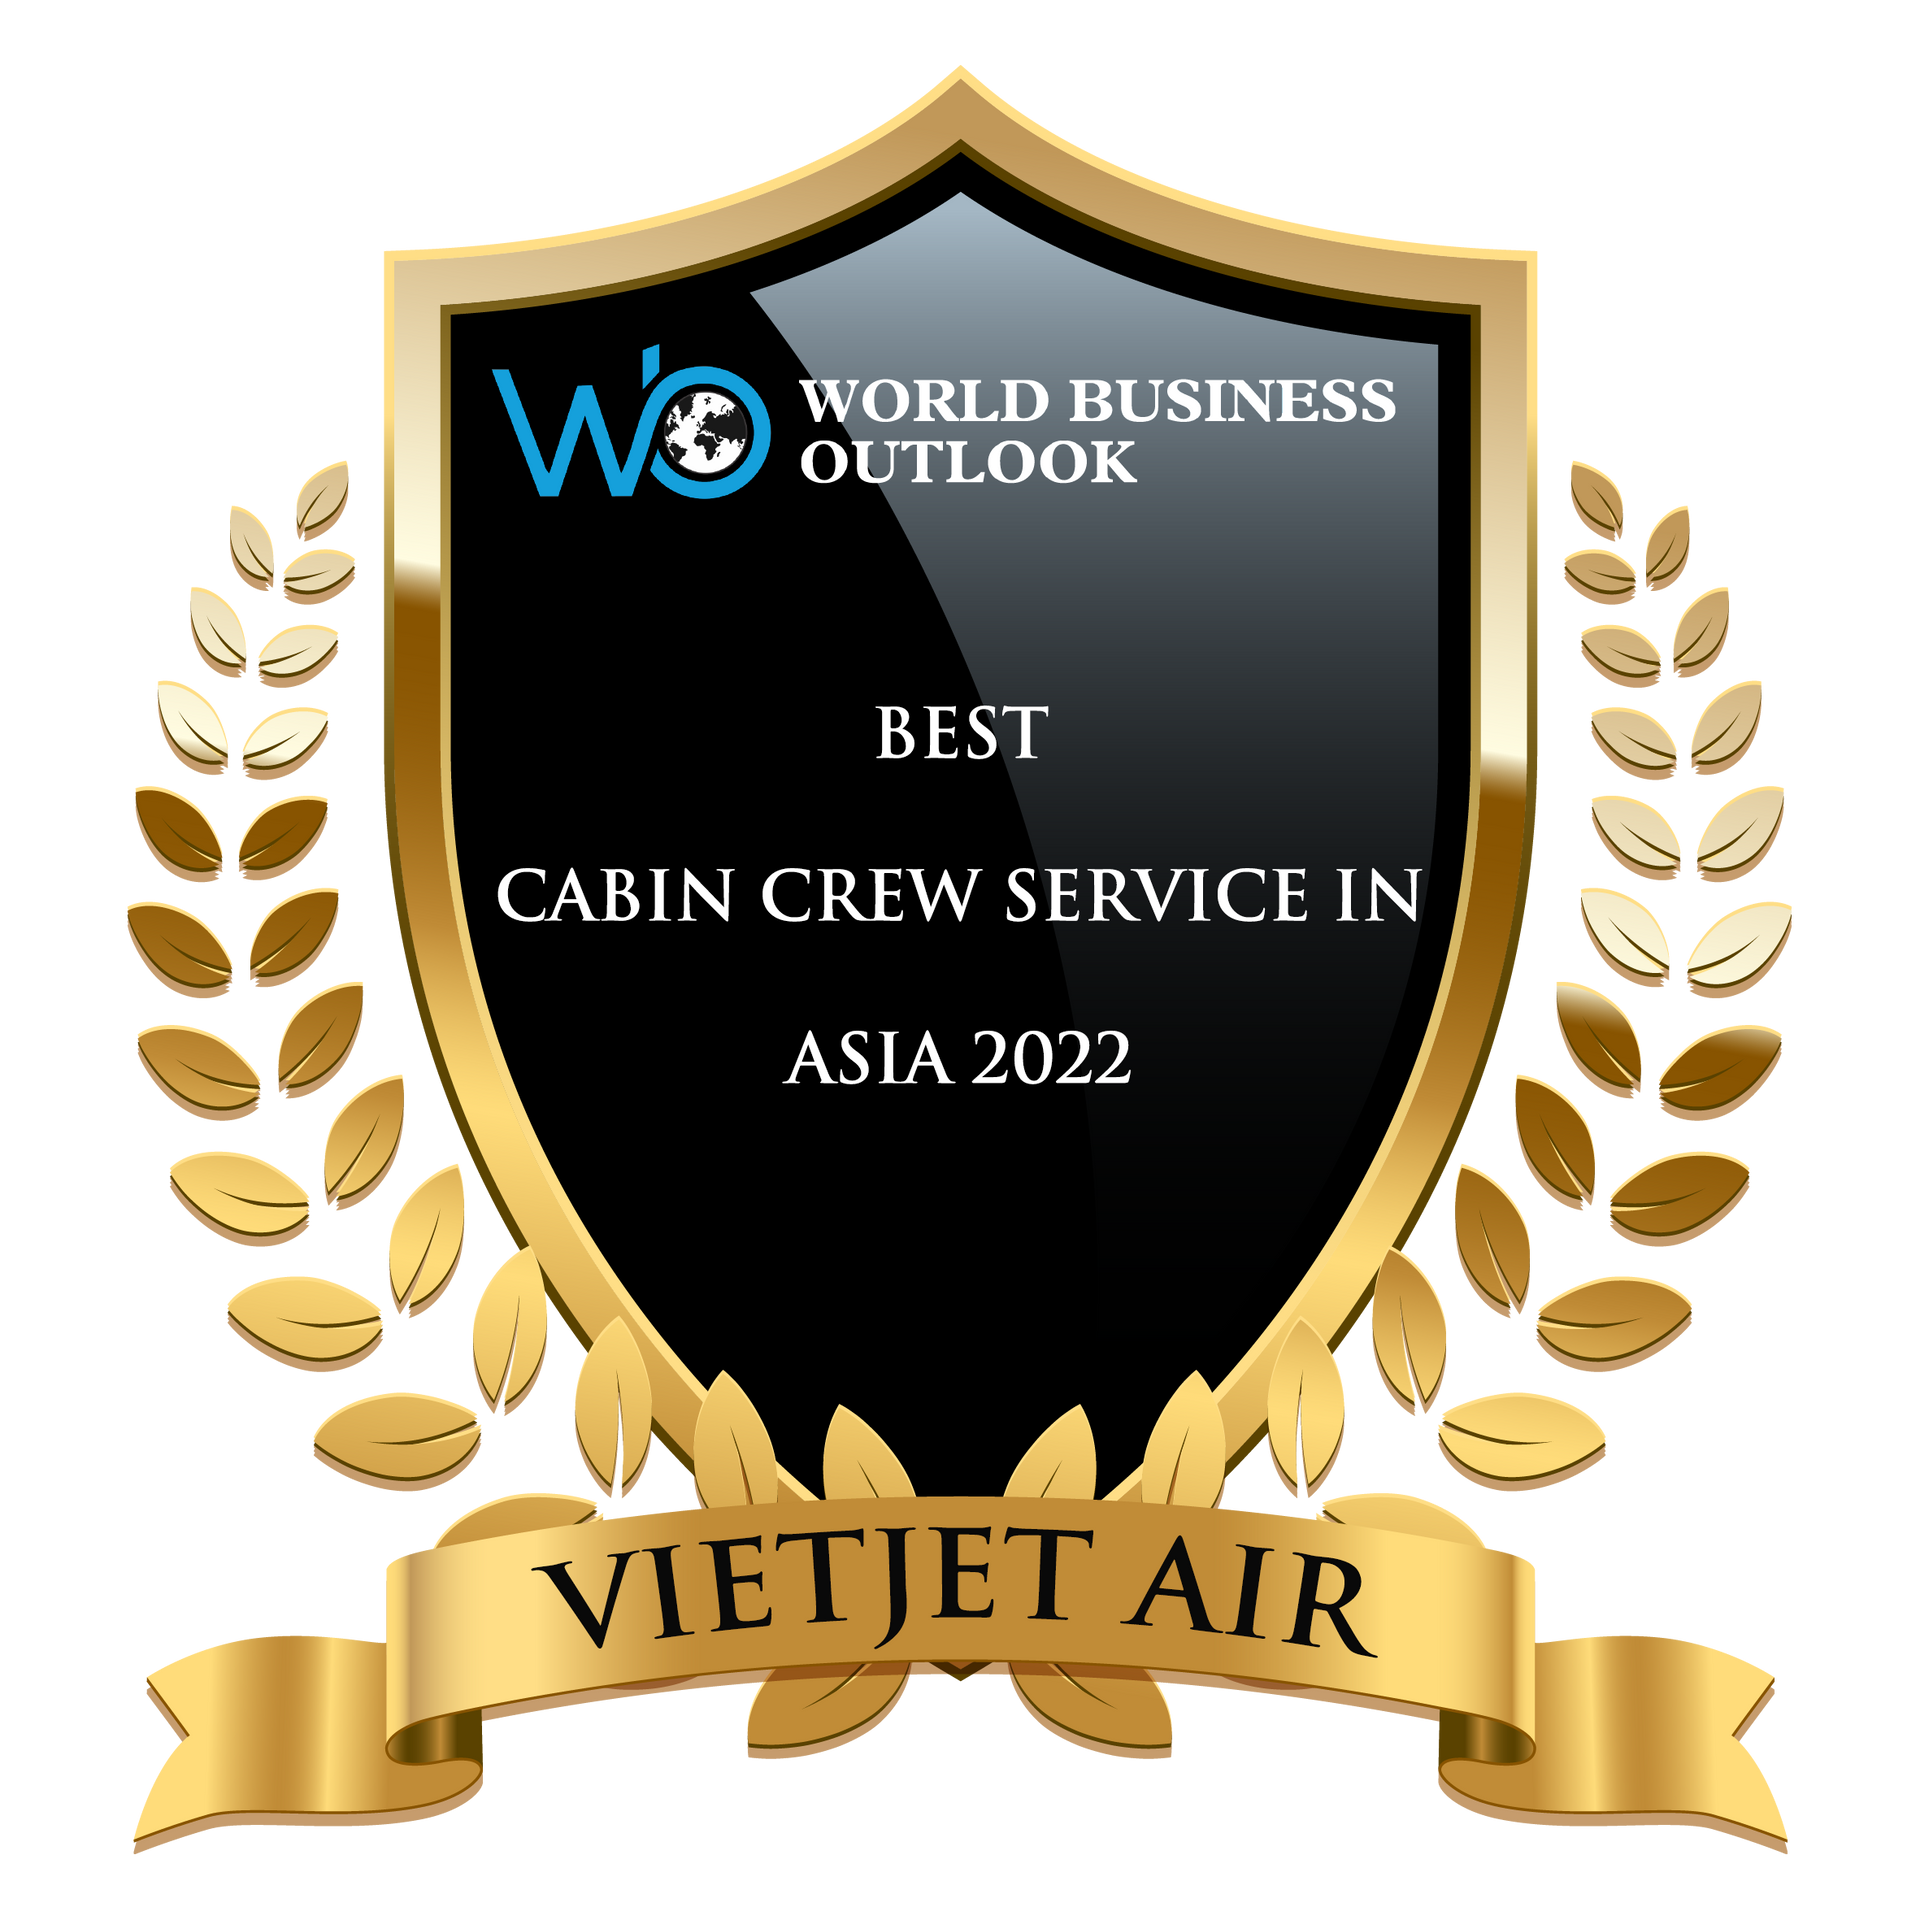 vietjet-air-best-cabin-crew-service-asia-2022.png